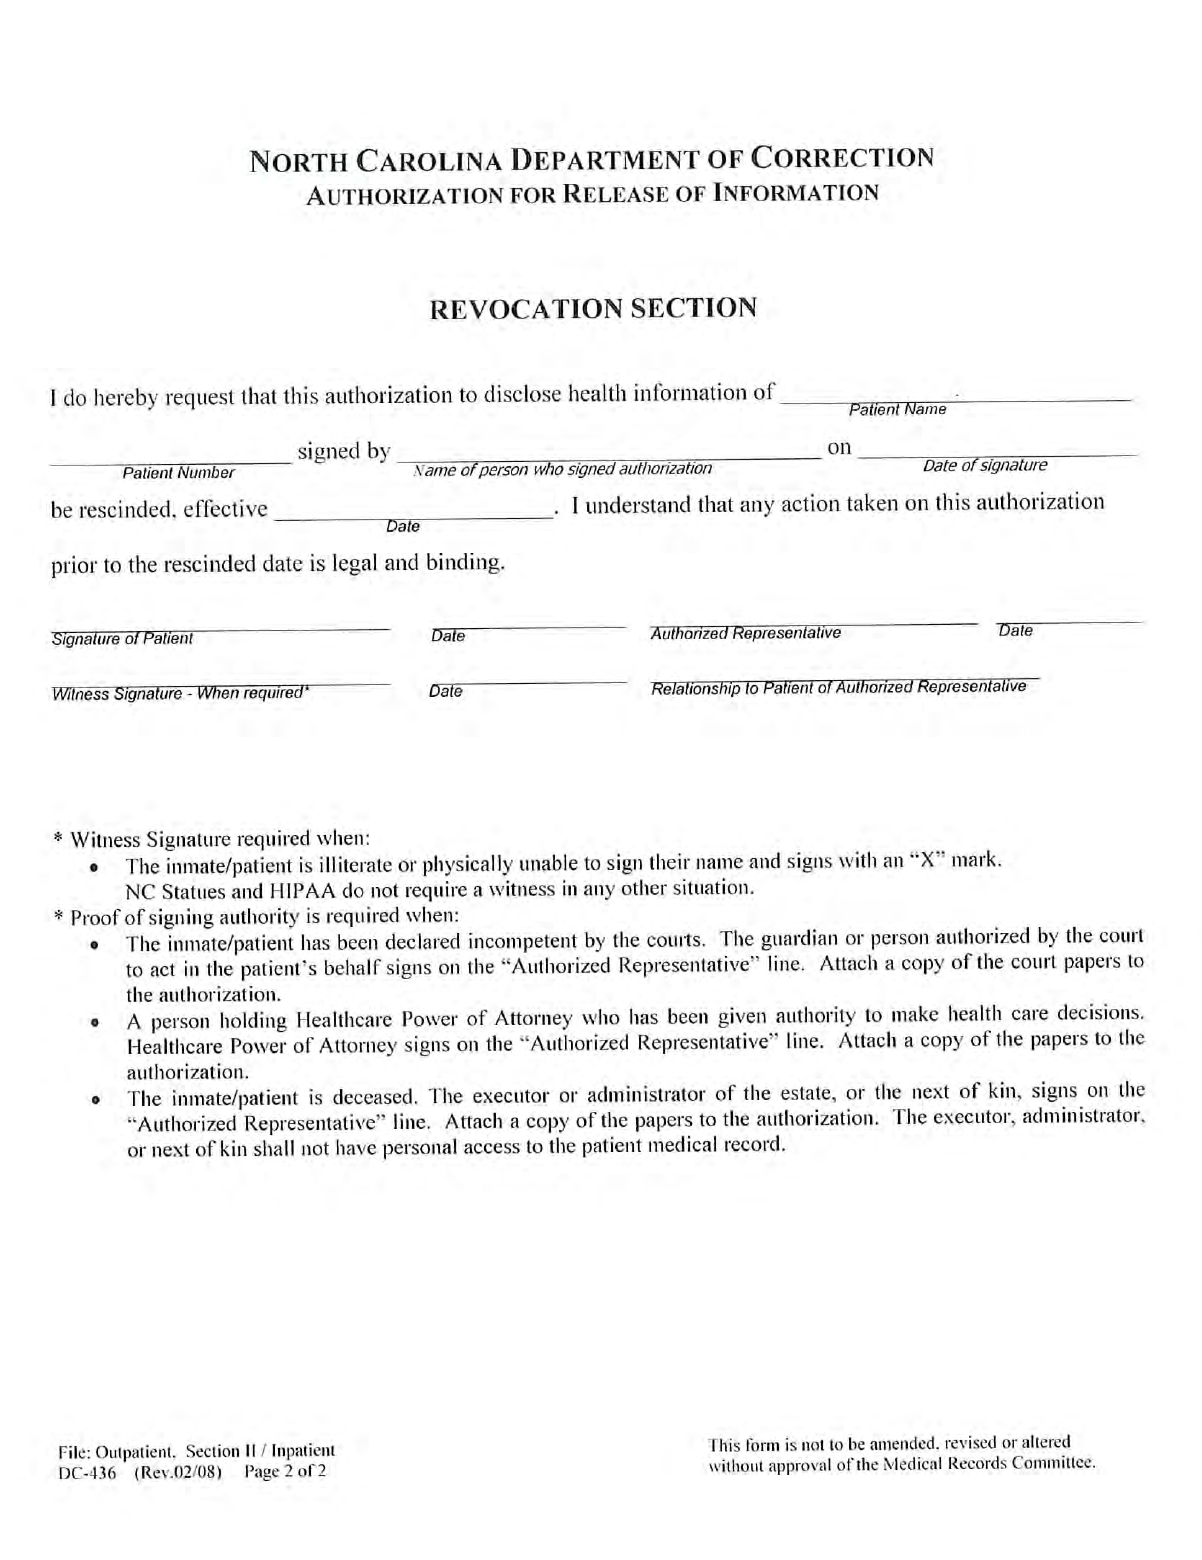 North Carolina Medical Records Release Form 1